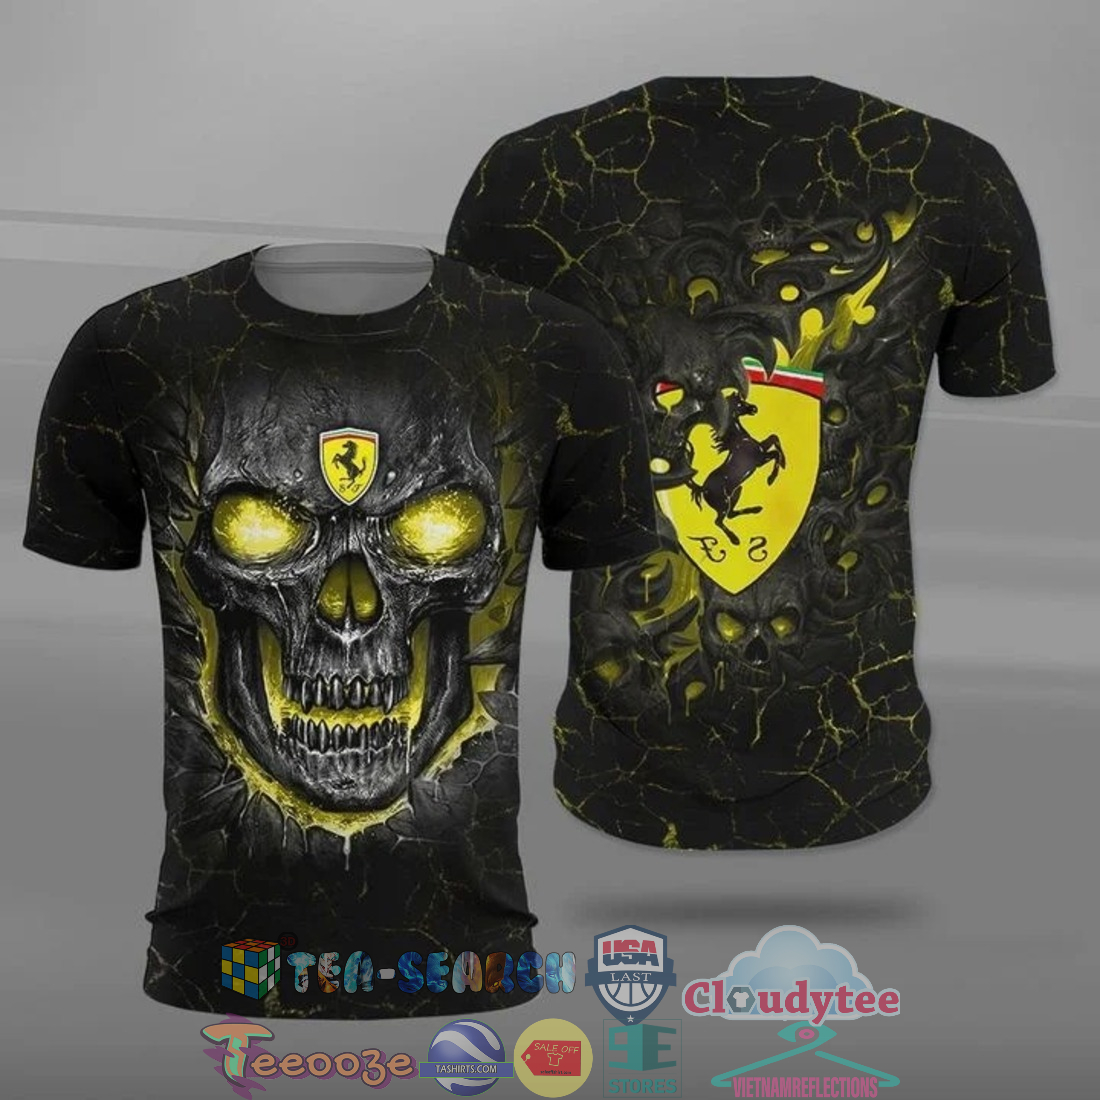 Zte1chYV-TH130522-16xxxFerrari-skull-ver-2-all-over-printed-t-shirt-hoodie3.jpg